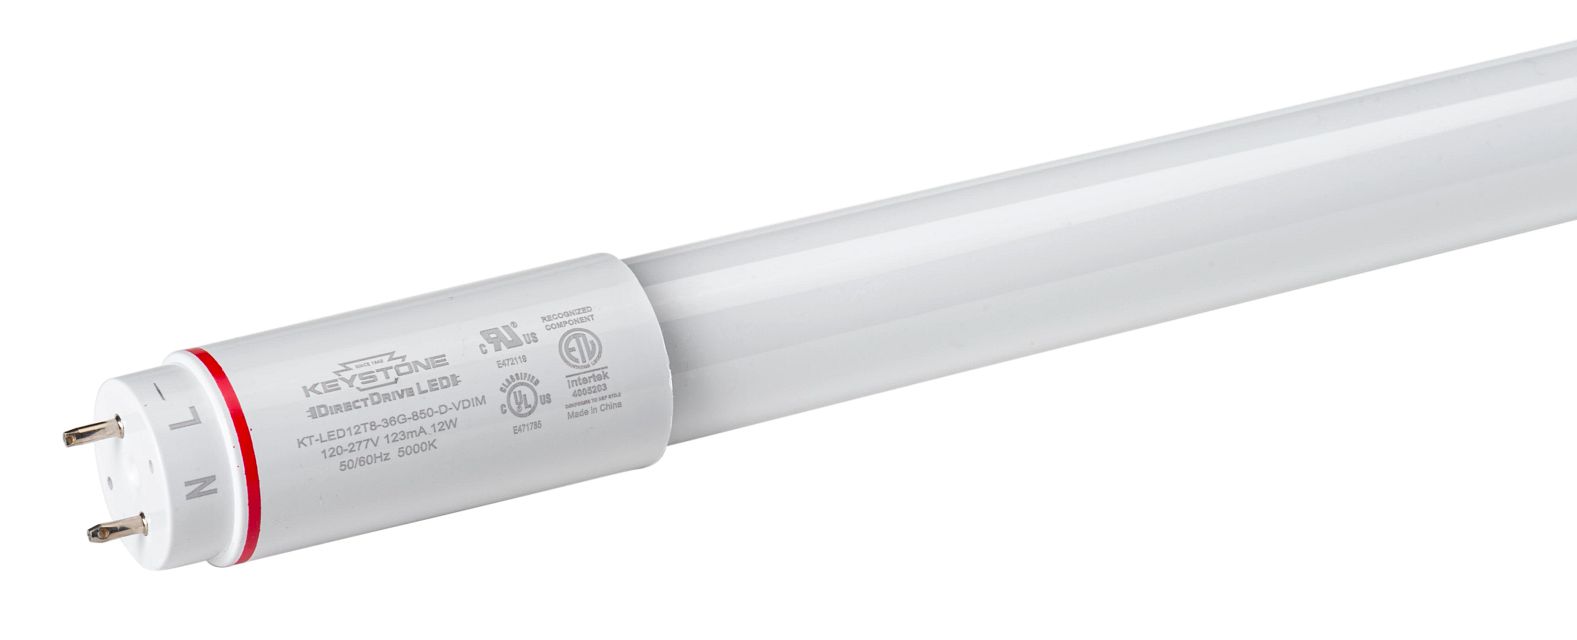 Keystone 12W LED T8 Tube Shatter-Proof Coated Glass 120-277V Input 3 Foot 3500K Direct Drive 0-10V Dimming (KT-LED12T8-36GC-835-D-VDIM)